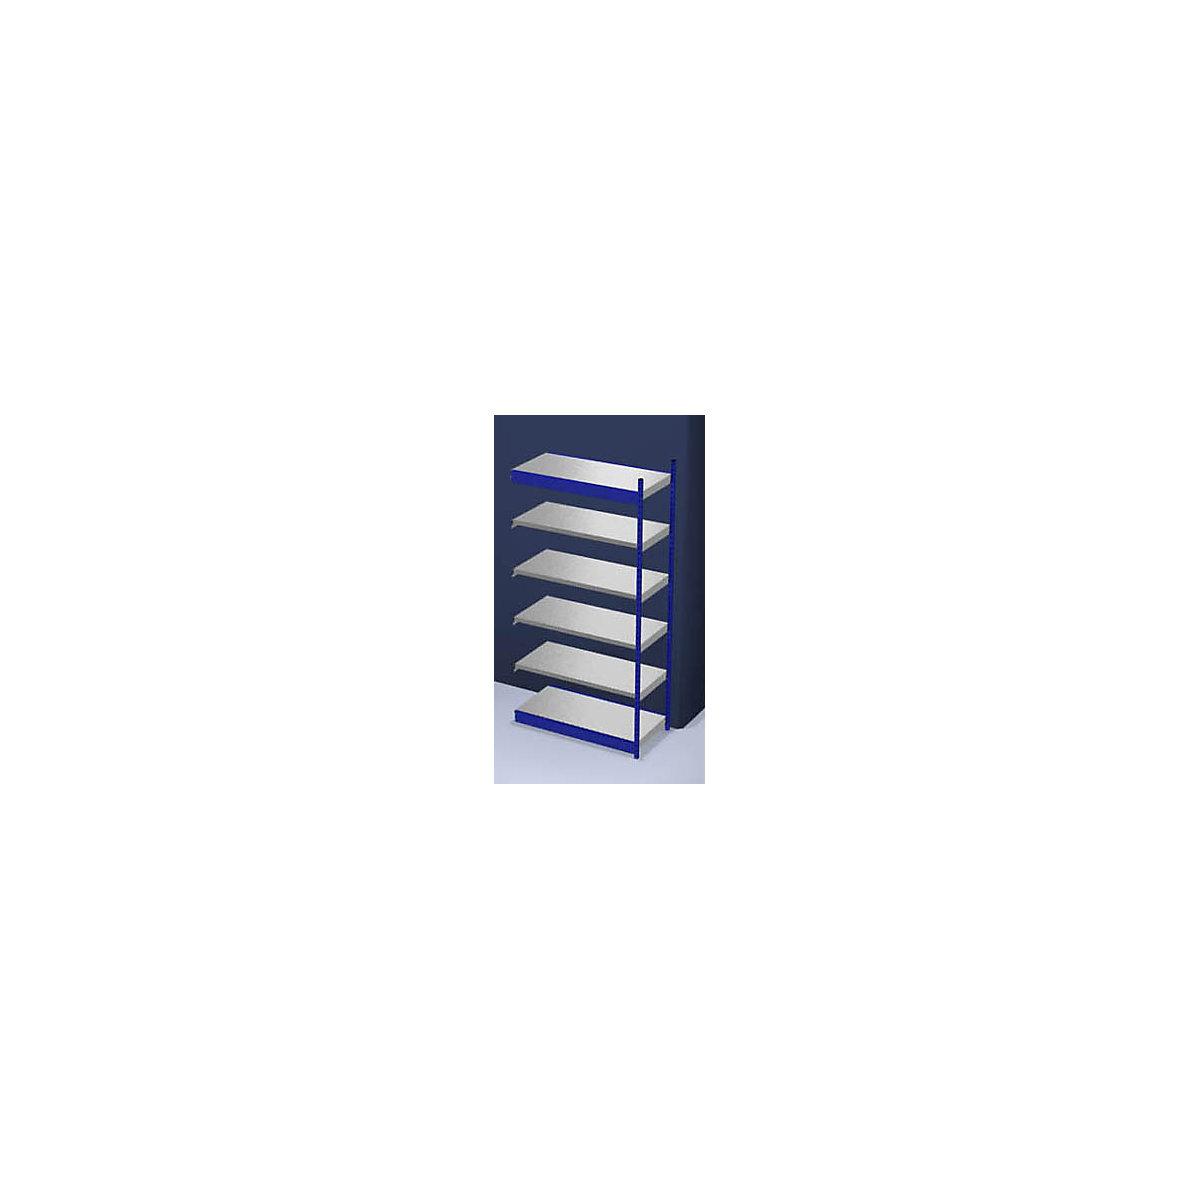 Stable boltless shelf unit, single sided – hofe, shelf unit height 2500 mm, blue / zinc-plated, shelf width 1325 mm, extension shelf unit, width x depth 1325 x 600 mm-5